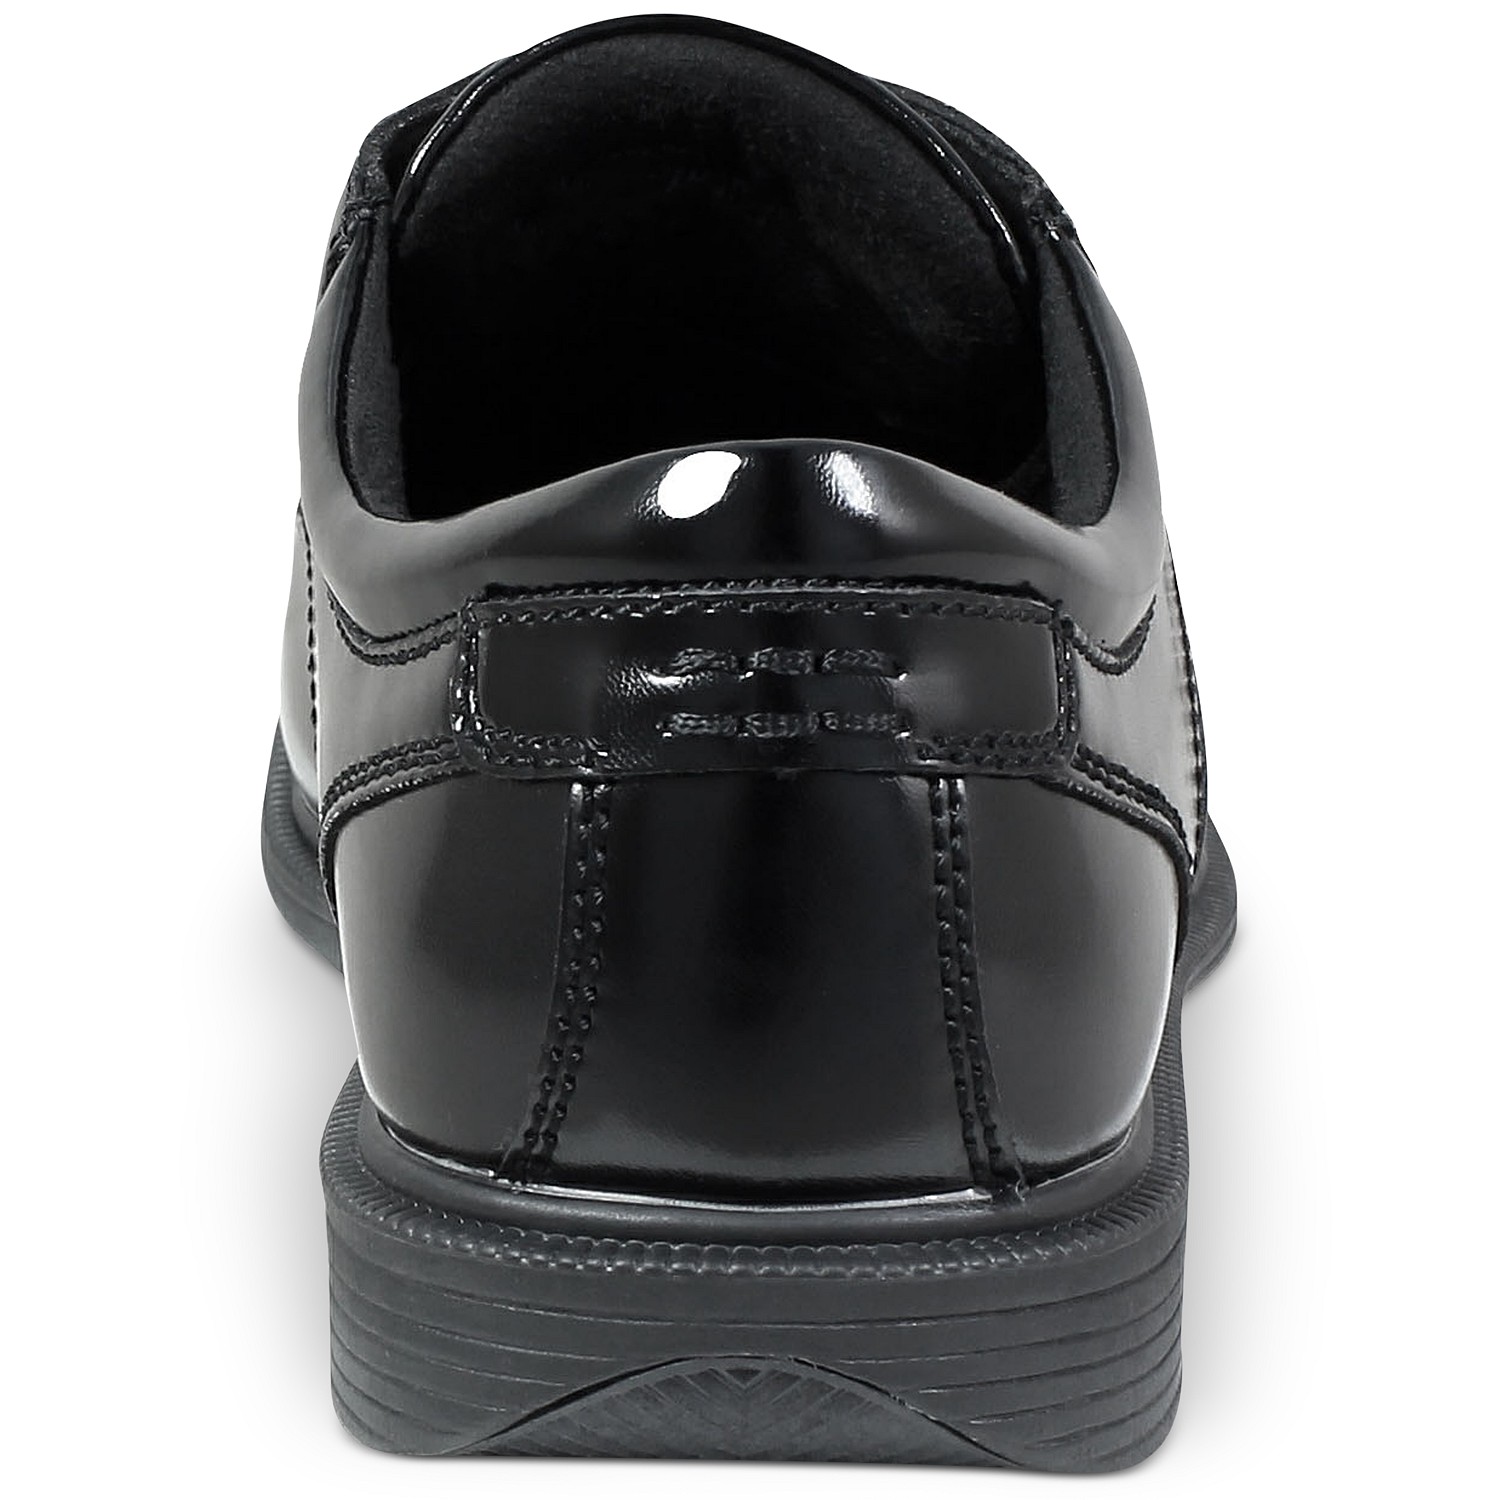 woocommerce-673321-2209615.cloudwaysapps.com-nunn-bush-mens-black-leather-bourbon-street-dress-casual-oxford-shoes